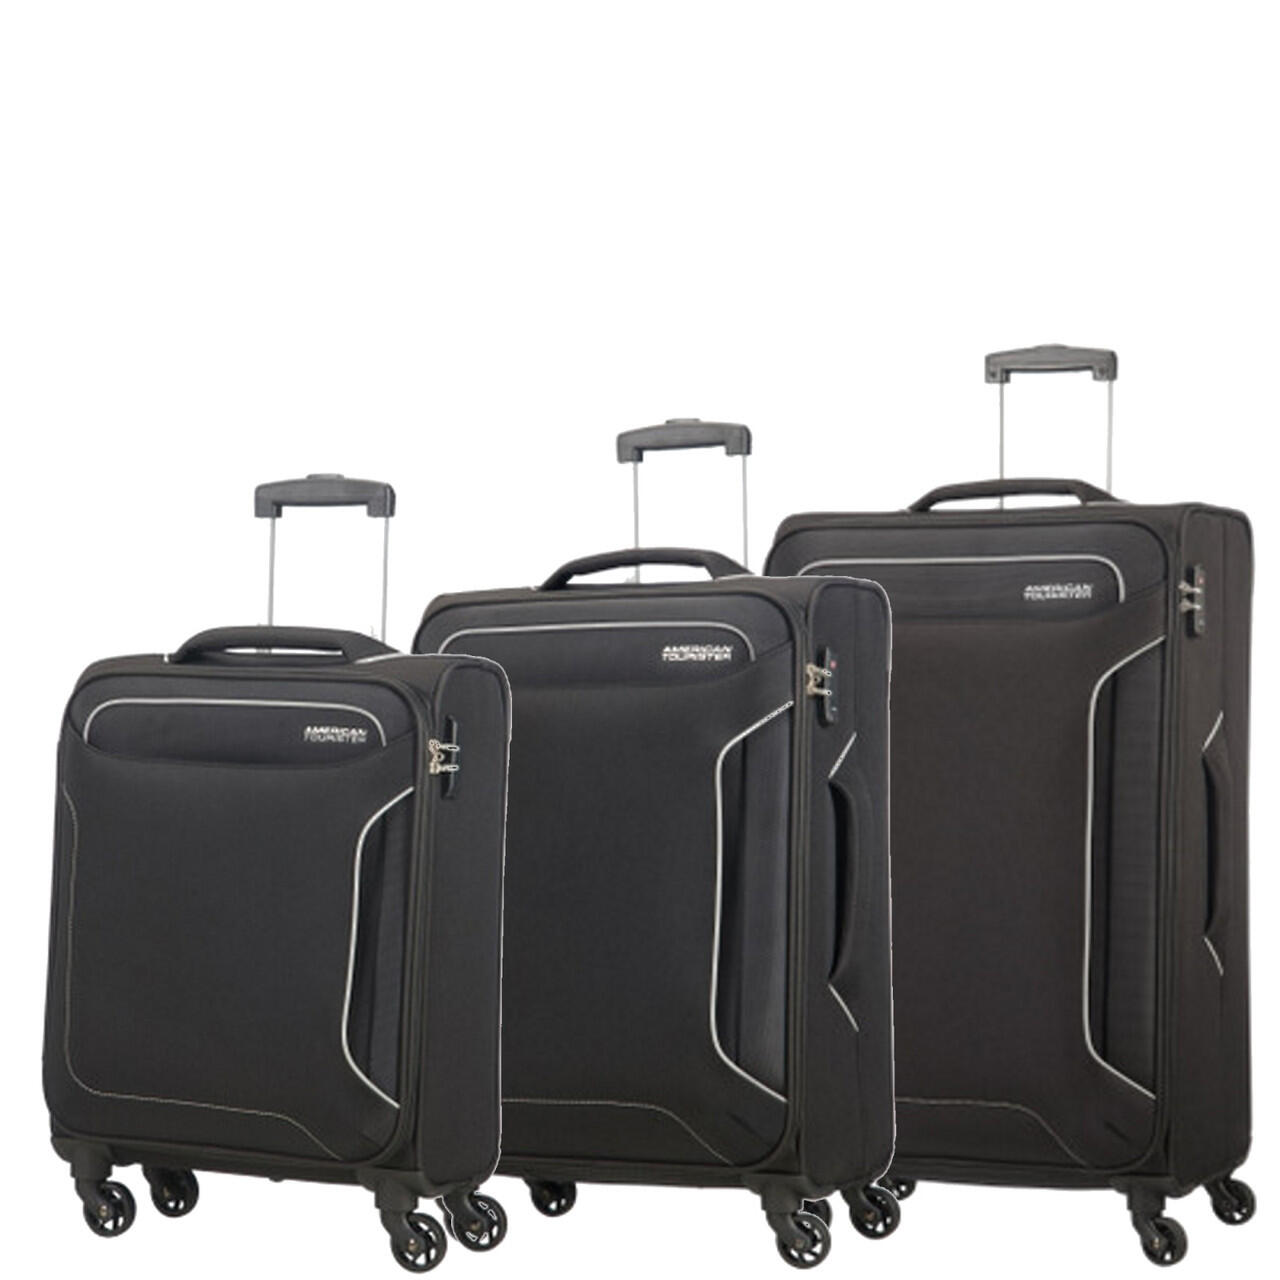 AMERICAN TOURISTER Holiday Heat 3 Piece Luggage Set - 55cm, 67cm & 79cm - Black